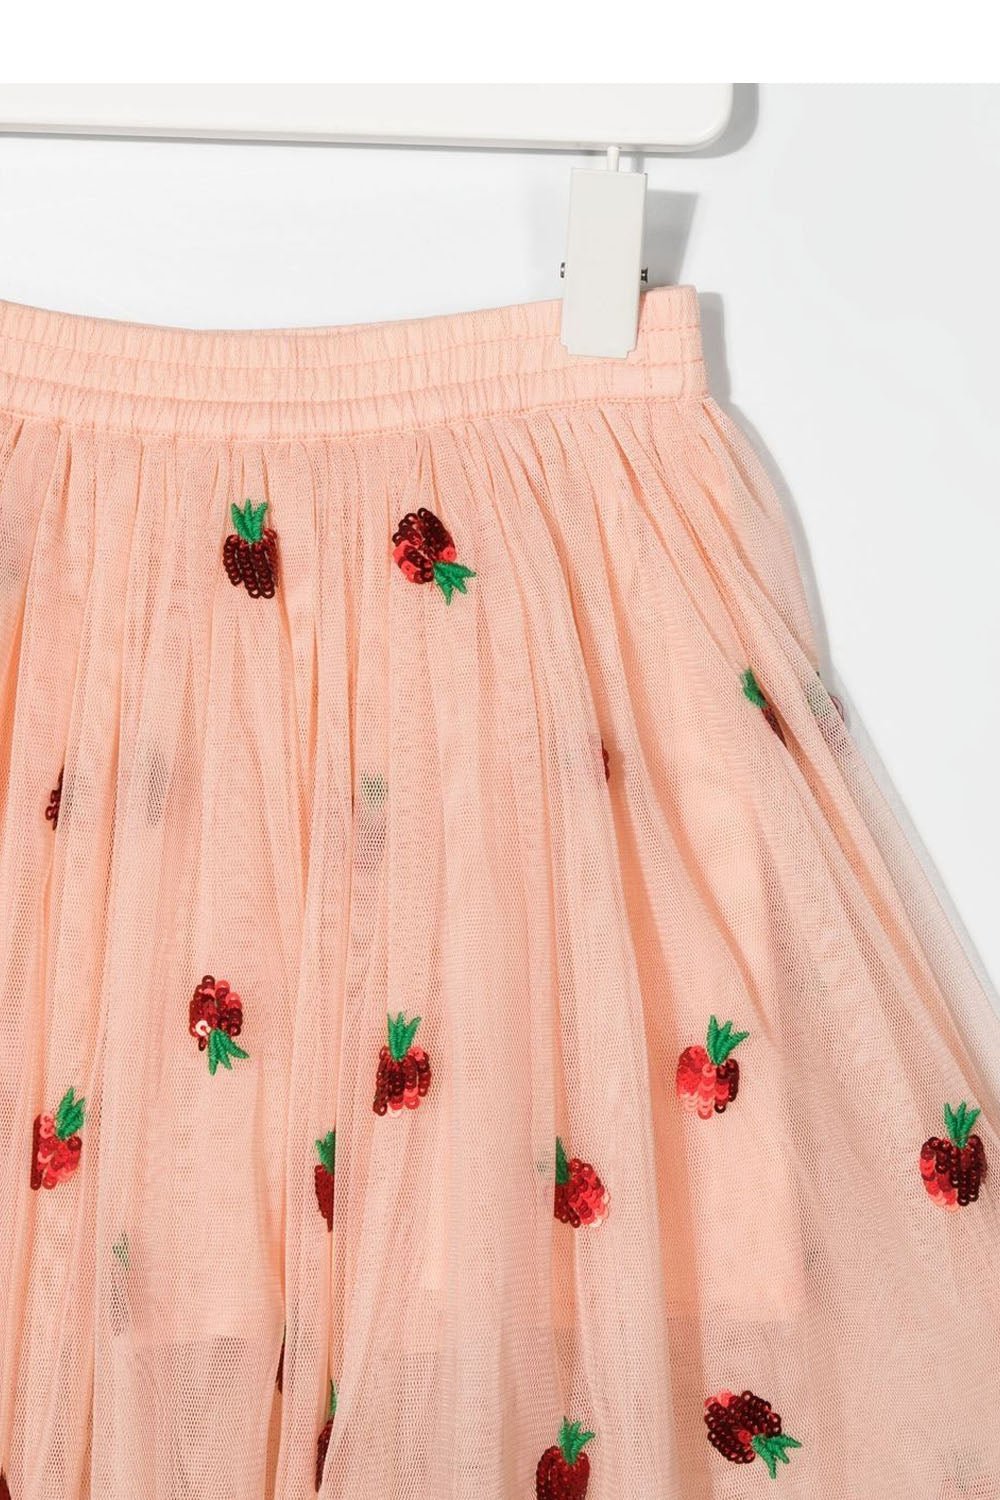 Sequins Strawberries Embro Tulle Skirt